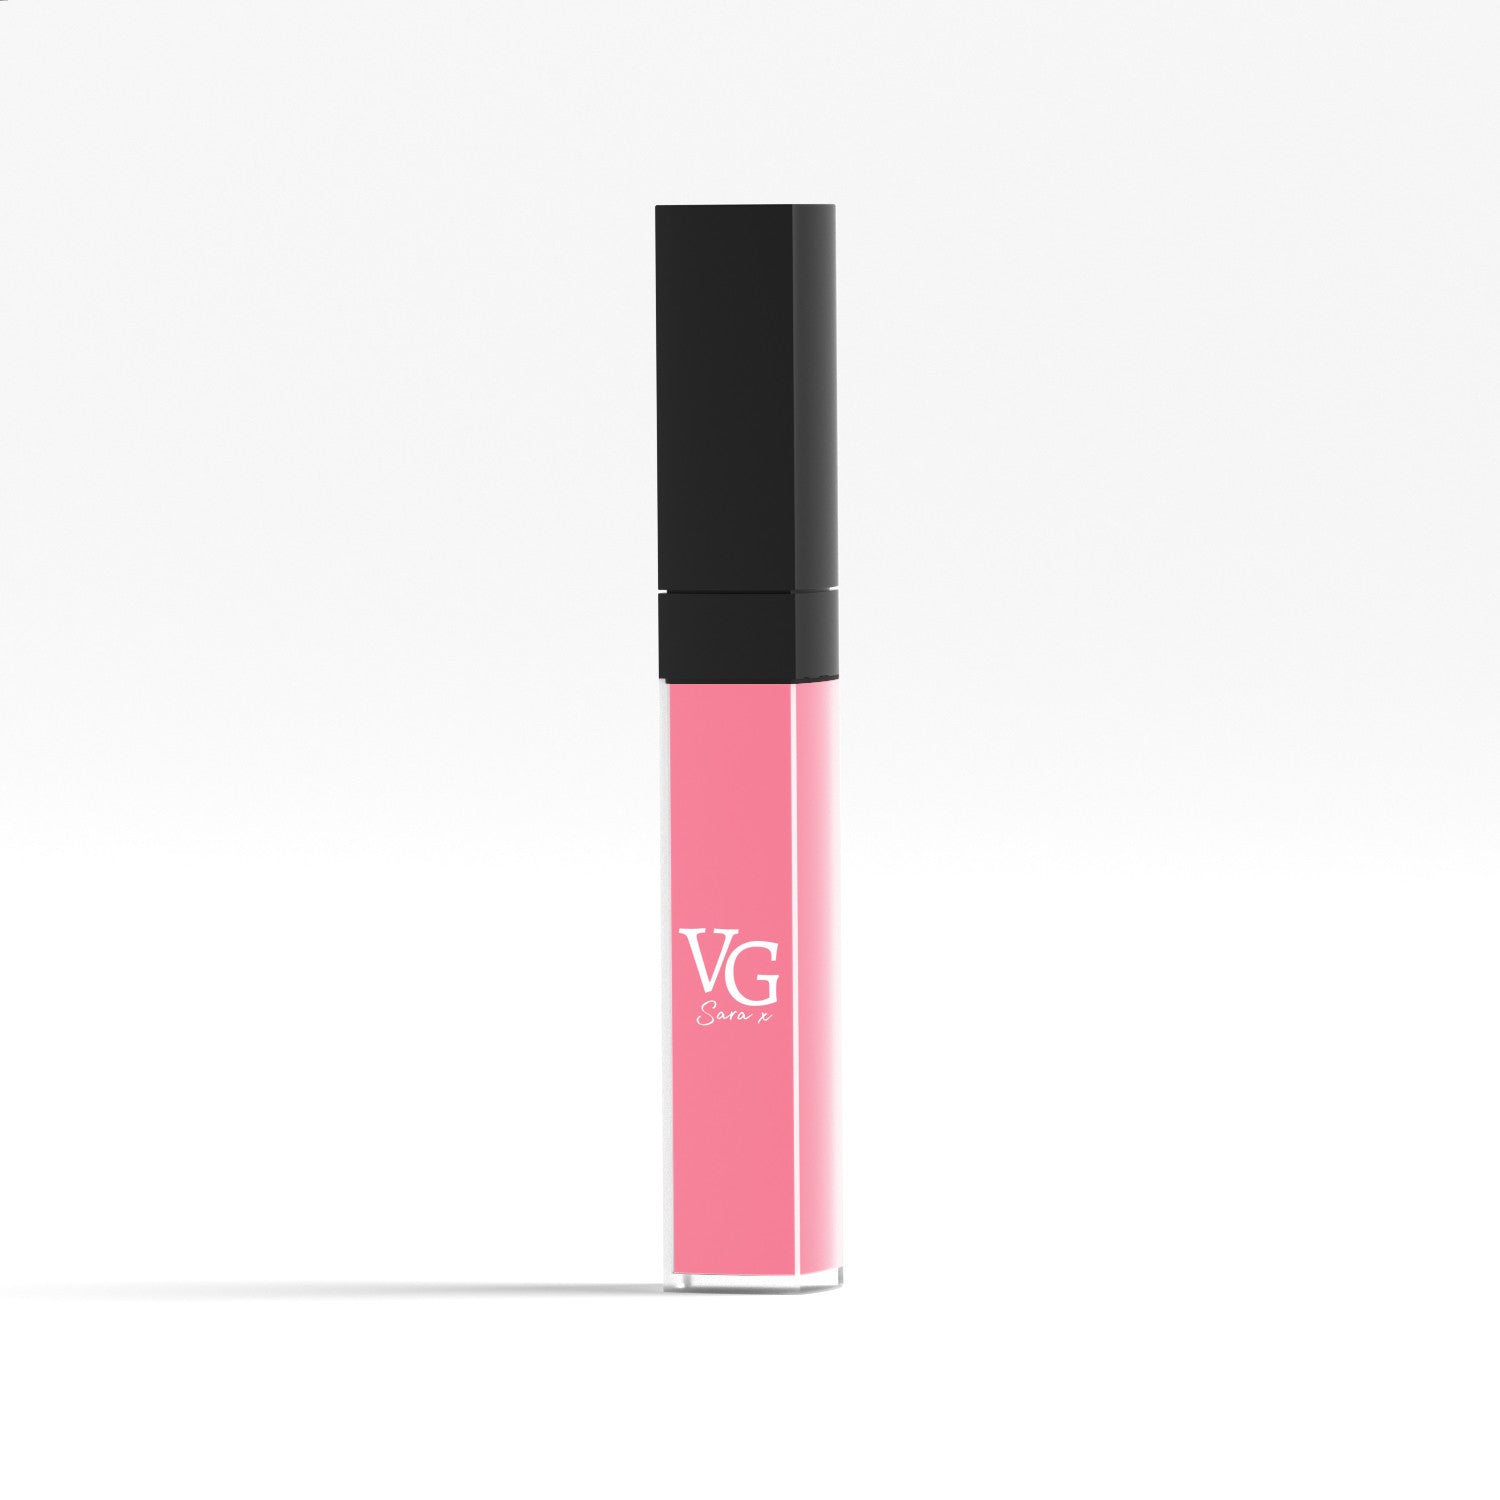 Soft pink vegan liquid lipstick featuring the VG trademark